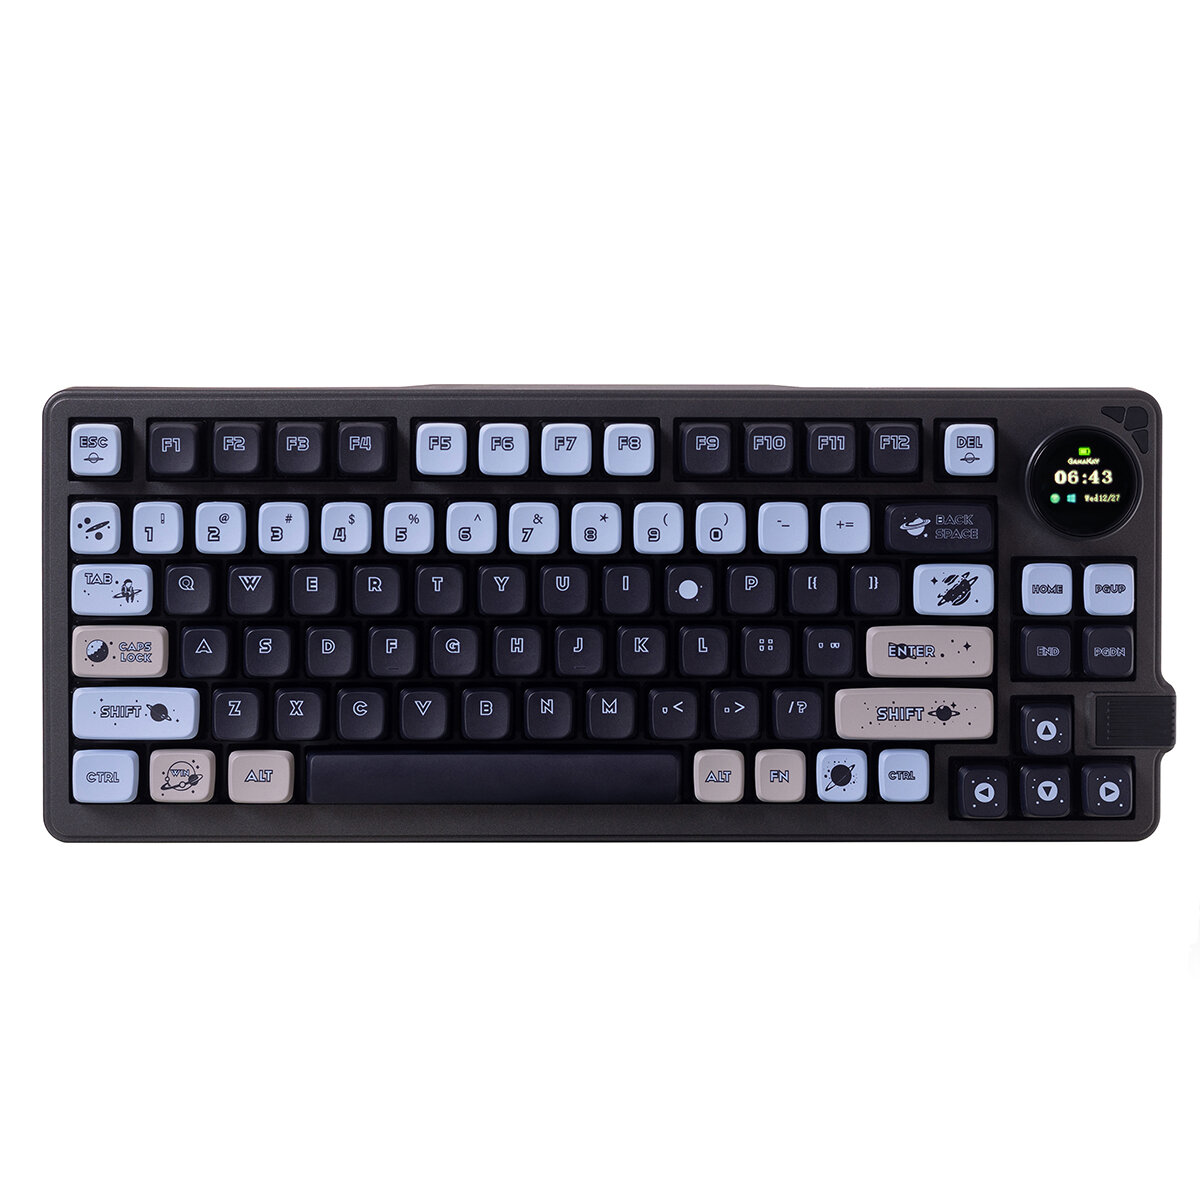 GAMAKAY LK75 75% Tri-mode Mechanical Keyboard Hot Swap Customize Switch MDA Profile RGB 83 Keys Gaming Keyboard With TFT